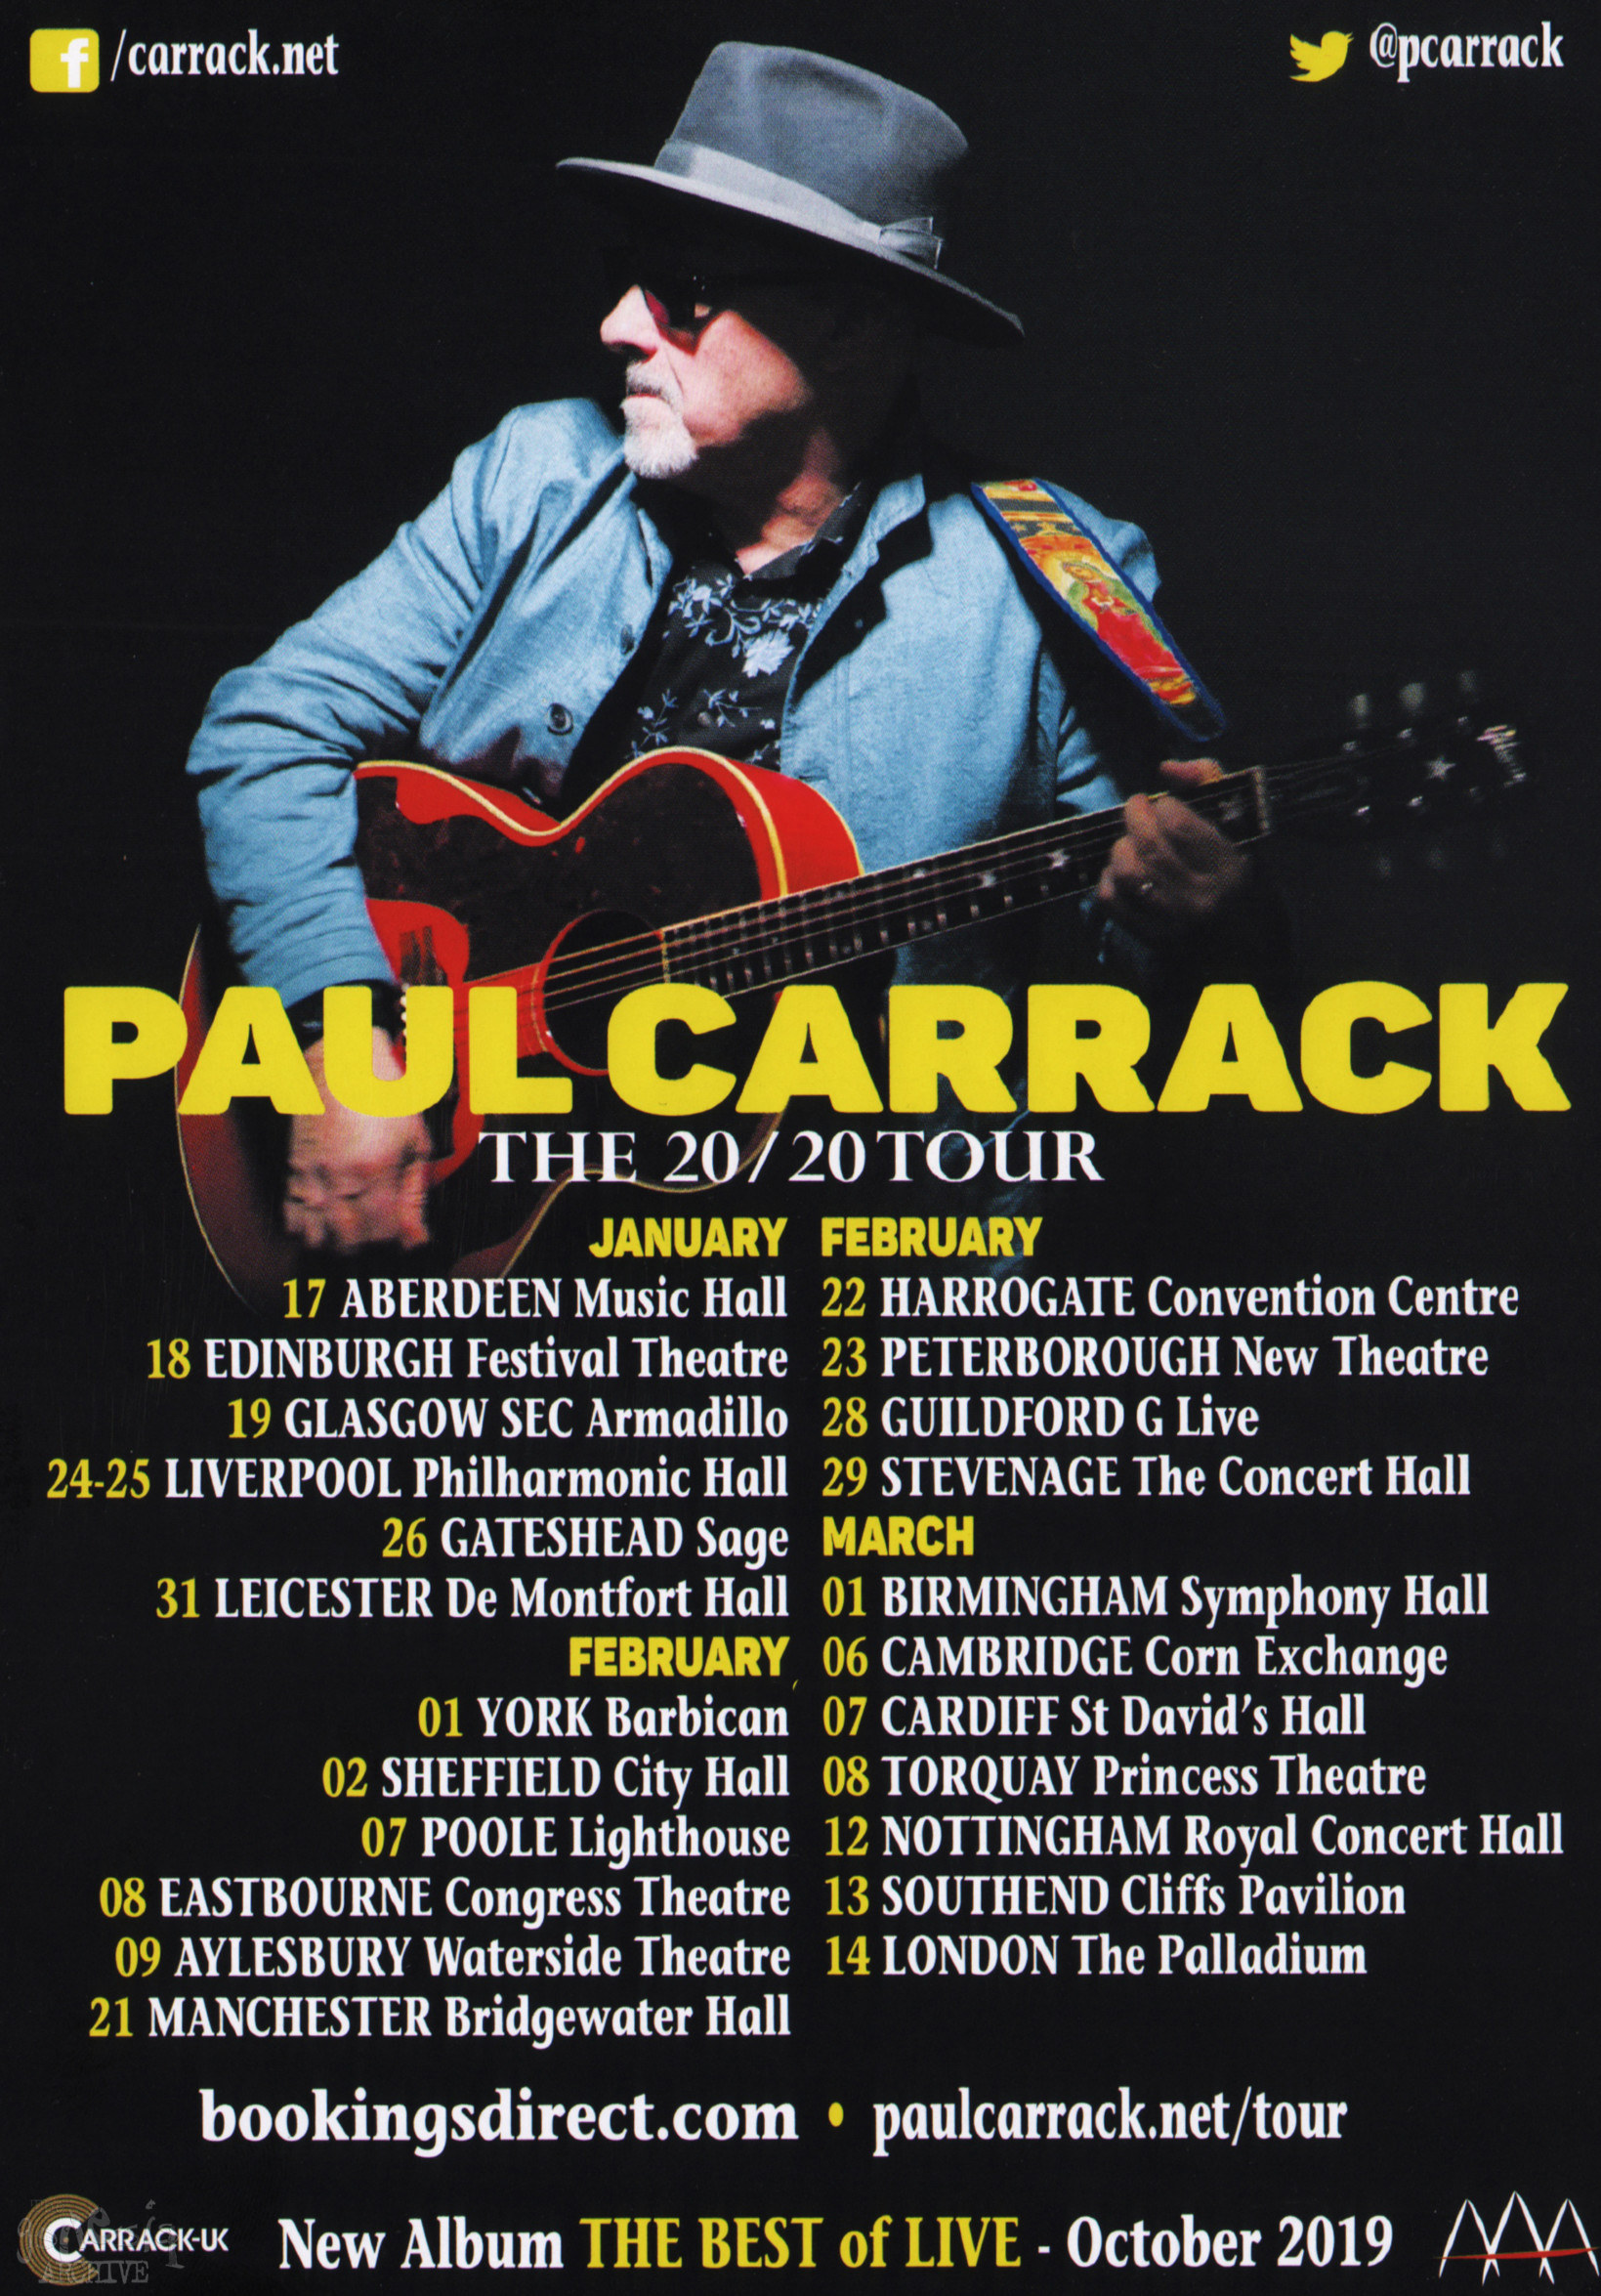 paul carrack tour schedule